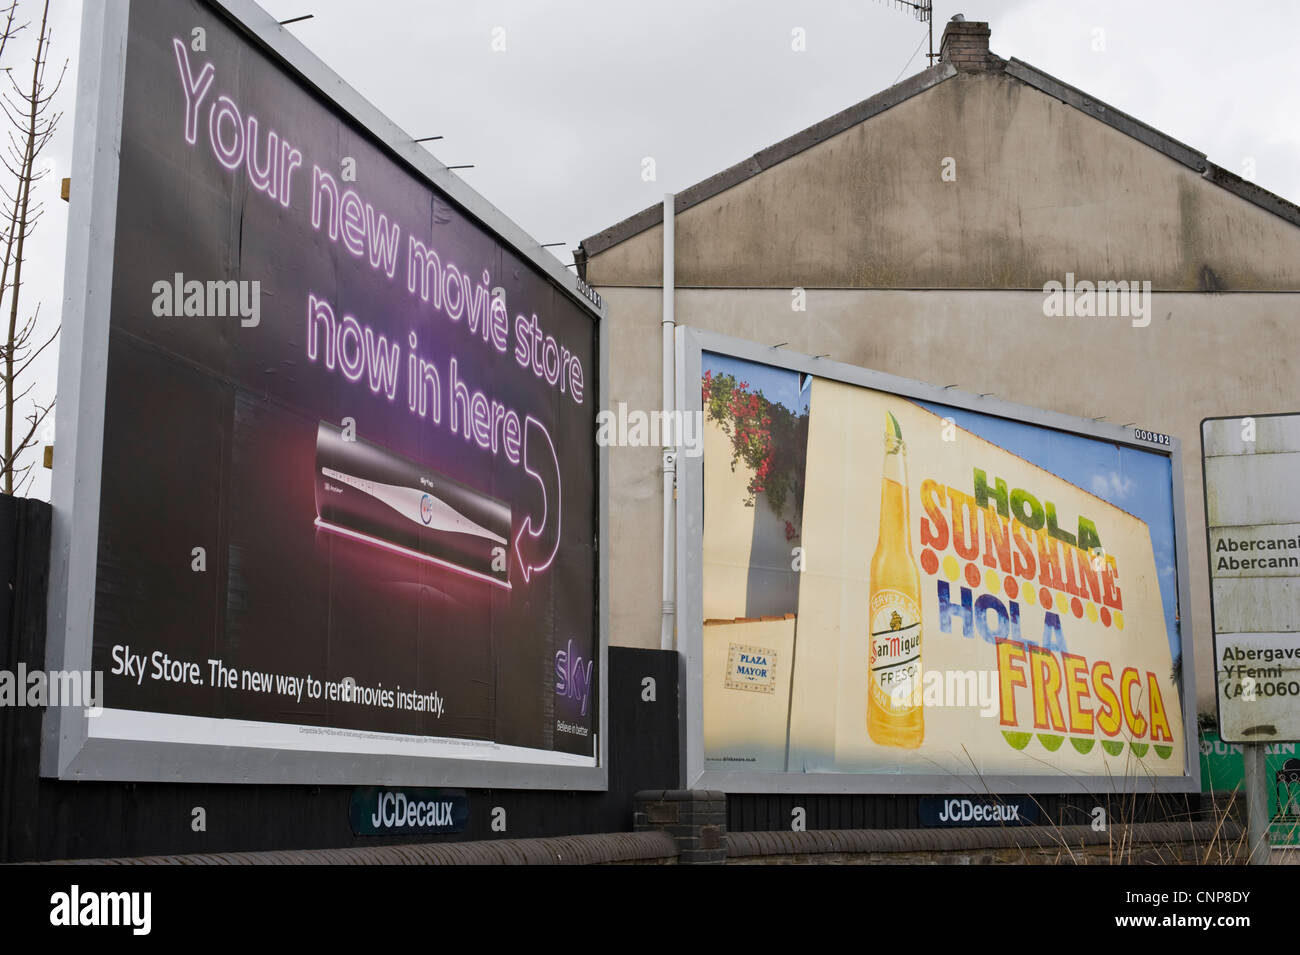 JCDecaux billboard pour SKY movie store dans Merthyr Tydfil South Wales UK Banque D'Images